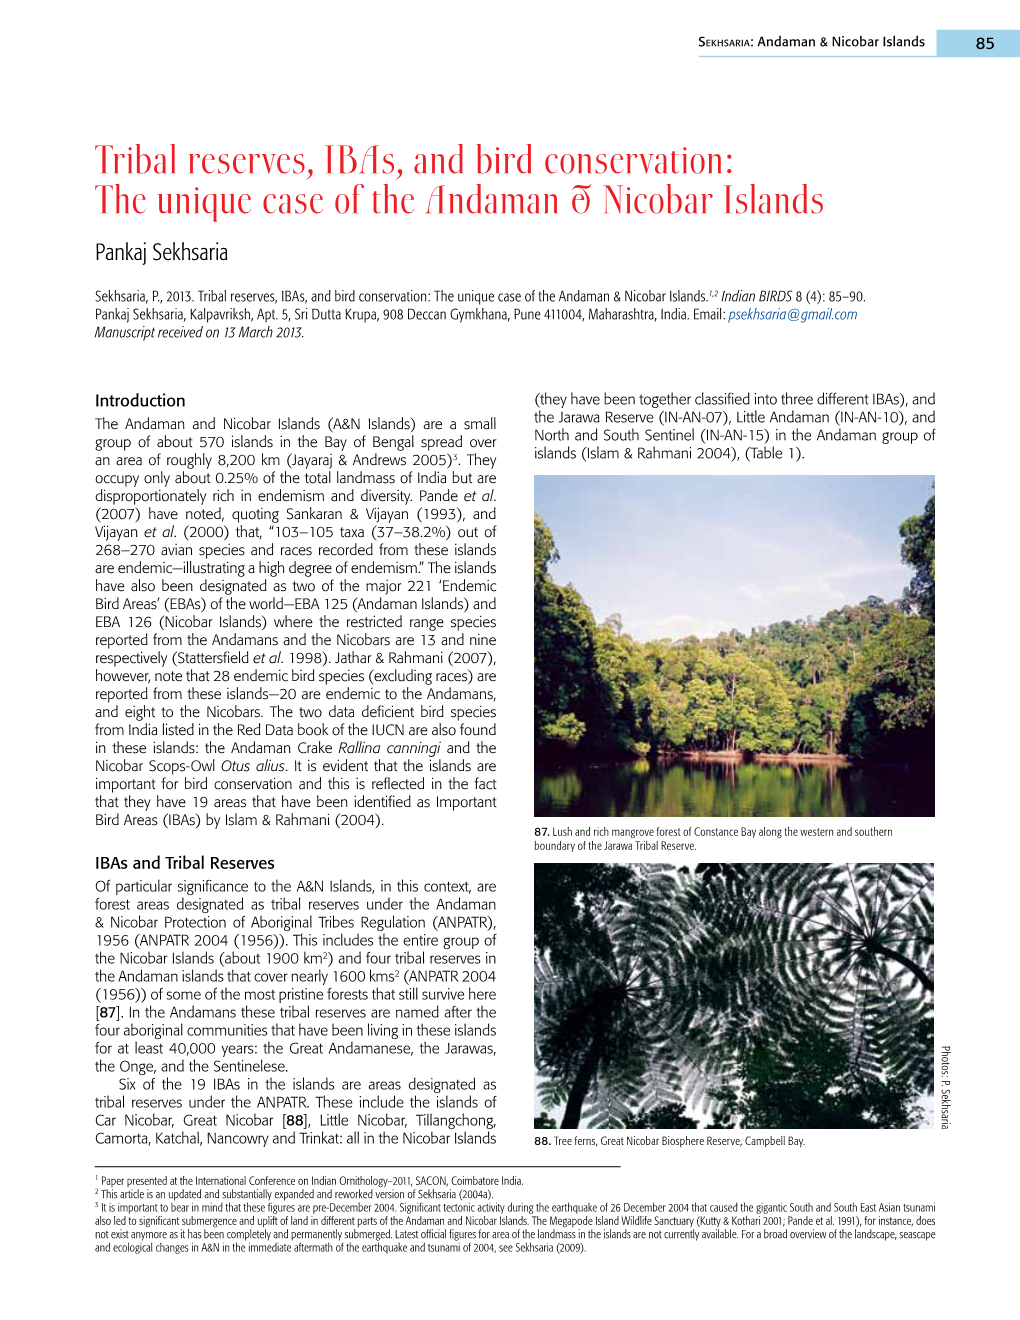 The Unique Case of the Andaman & Nicobar Islands